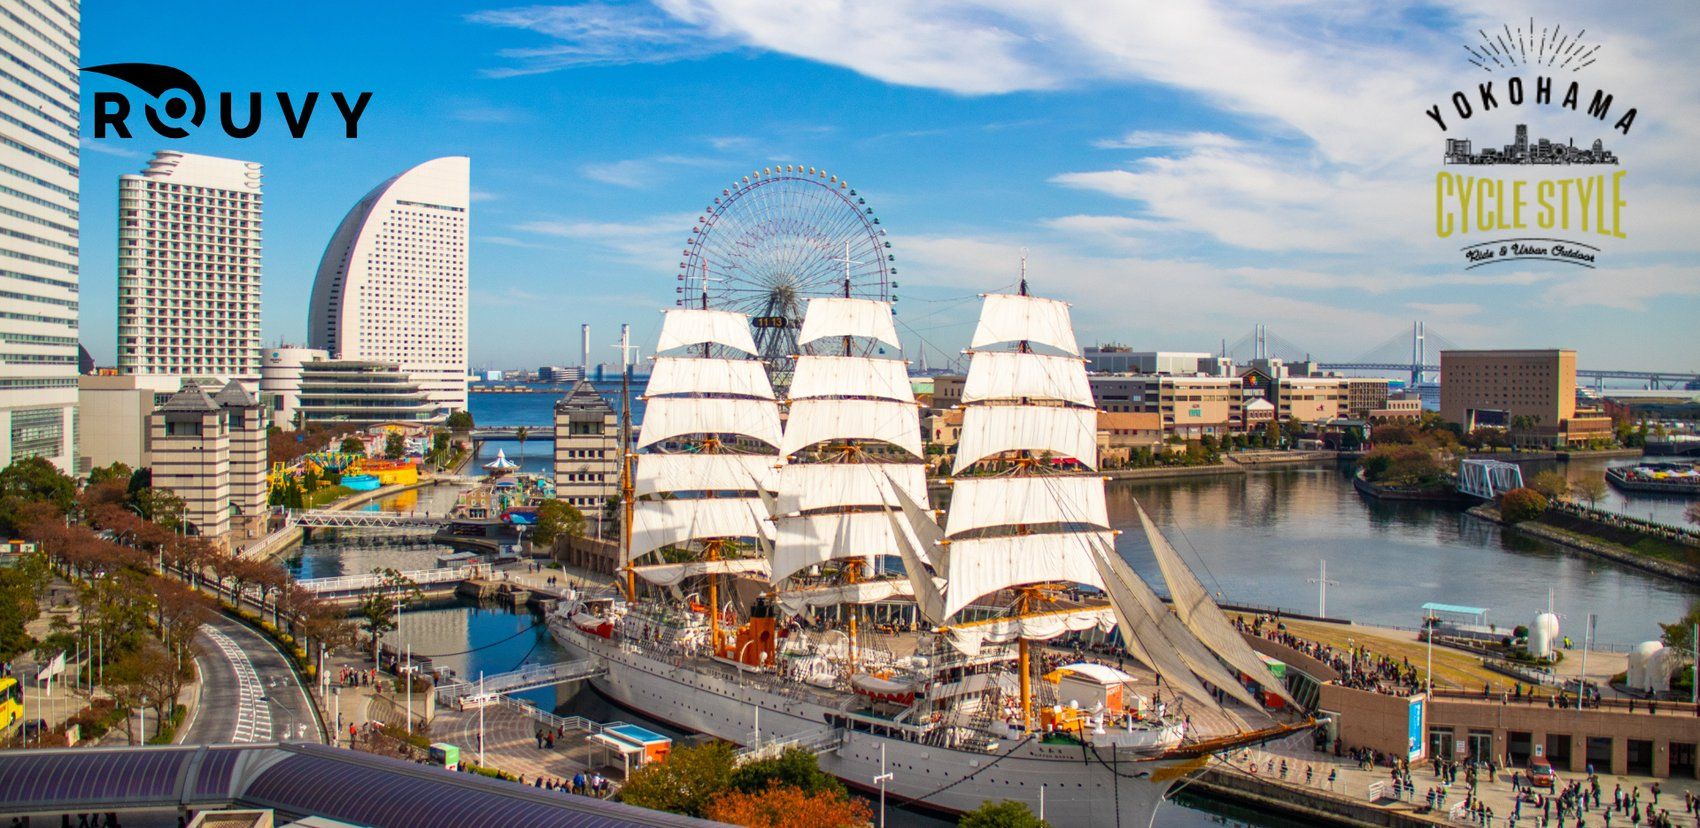 YOKOHAMA CYCLE STYLE Festival presents the augmented Yokohama City Downtown with 2 virtual crit races on ROUVY